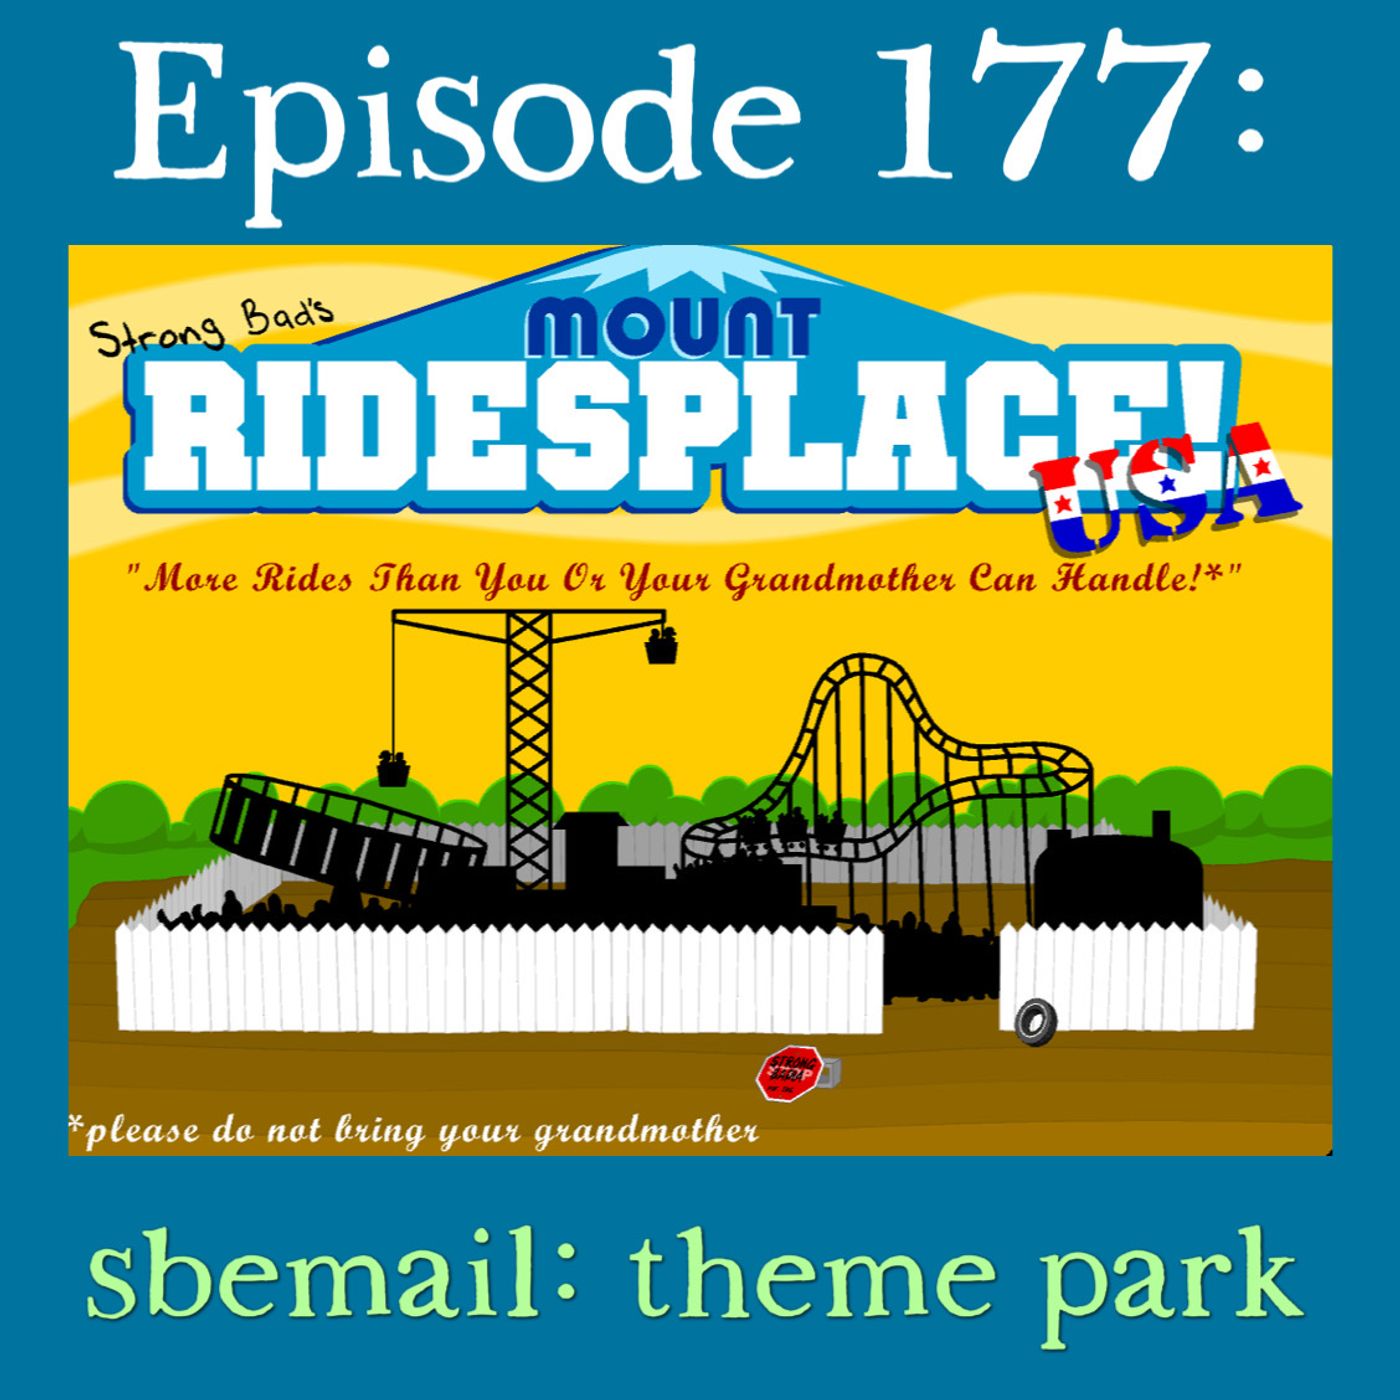 177: sbemail: theme park